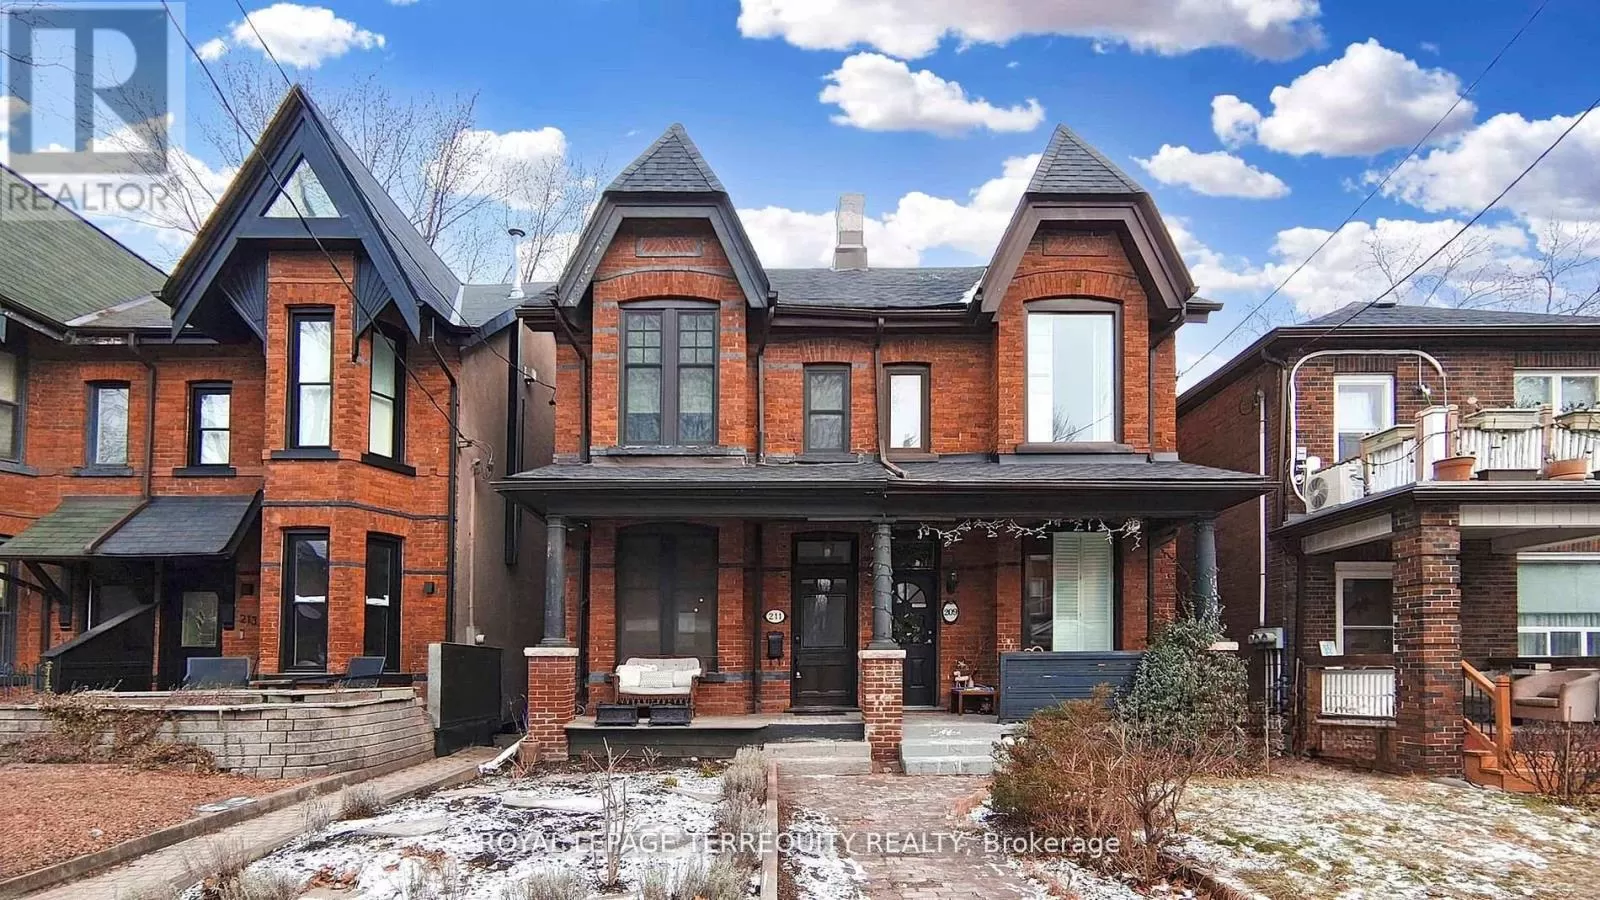 House for rent: 211 Pape Avenue, Toronto, Ontario M4M 2W2